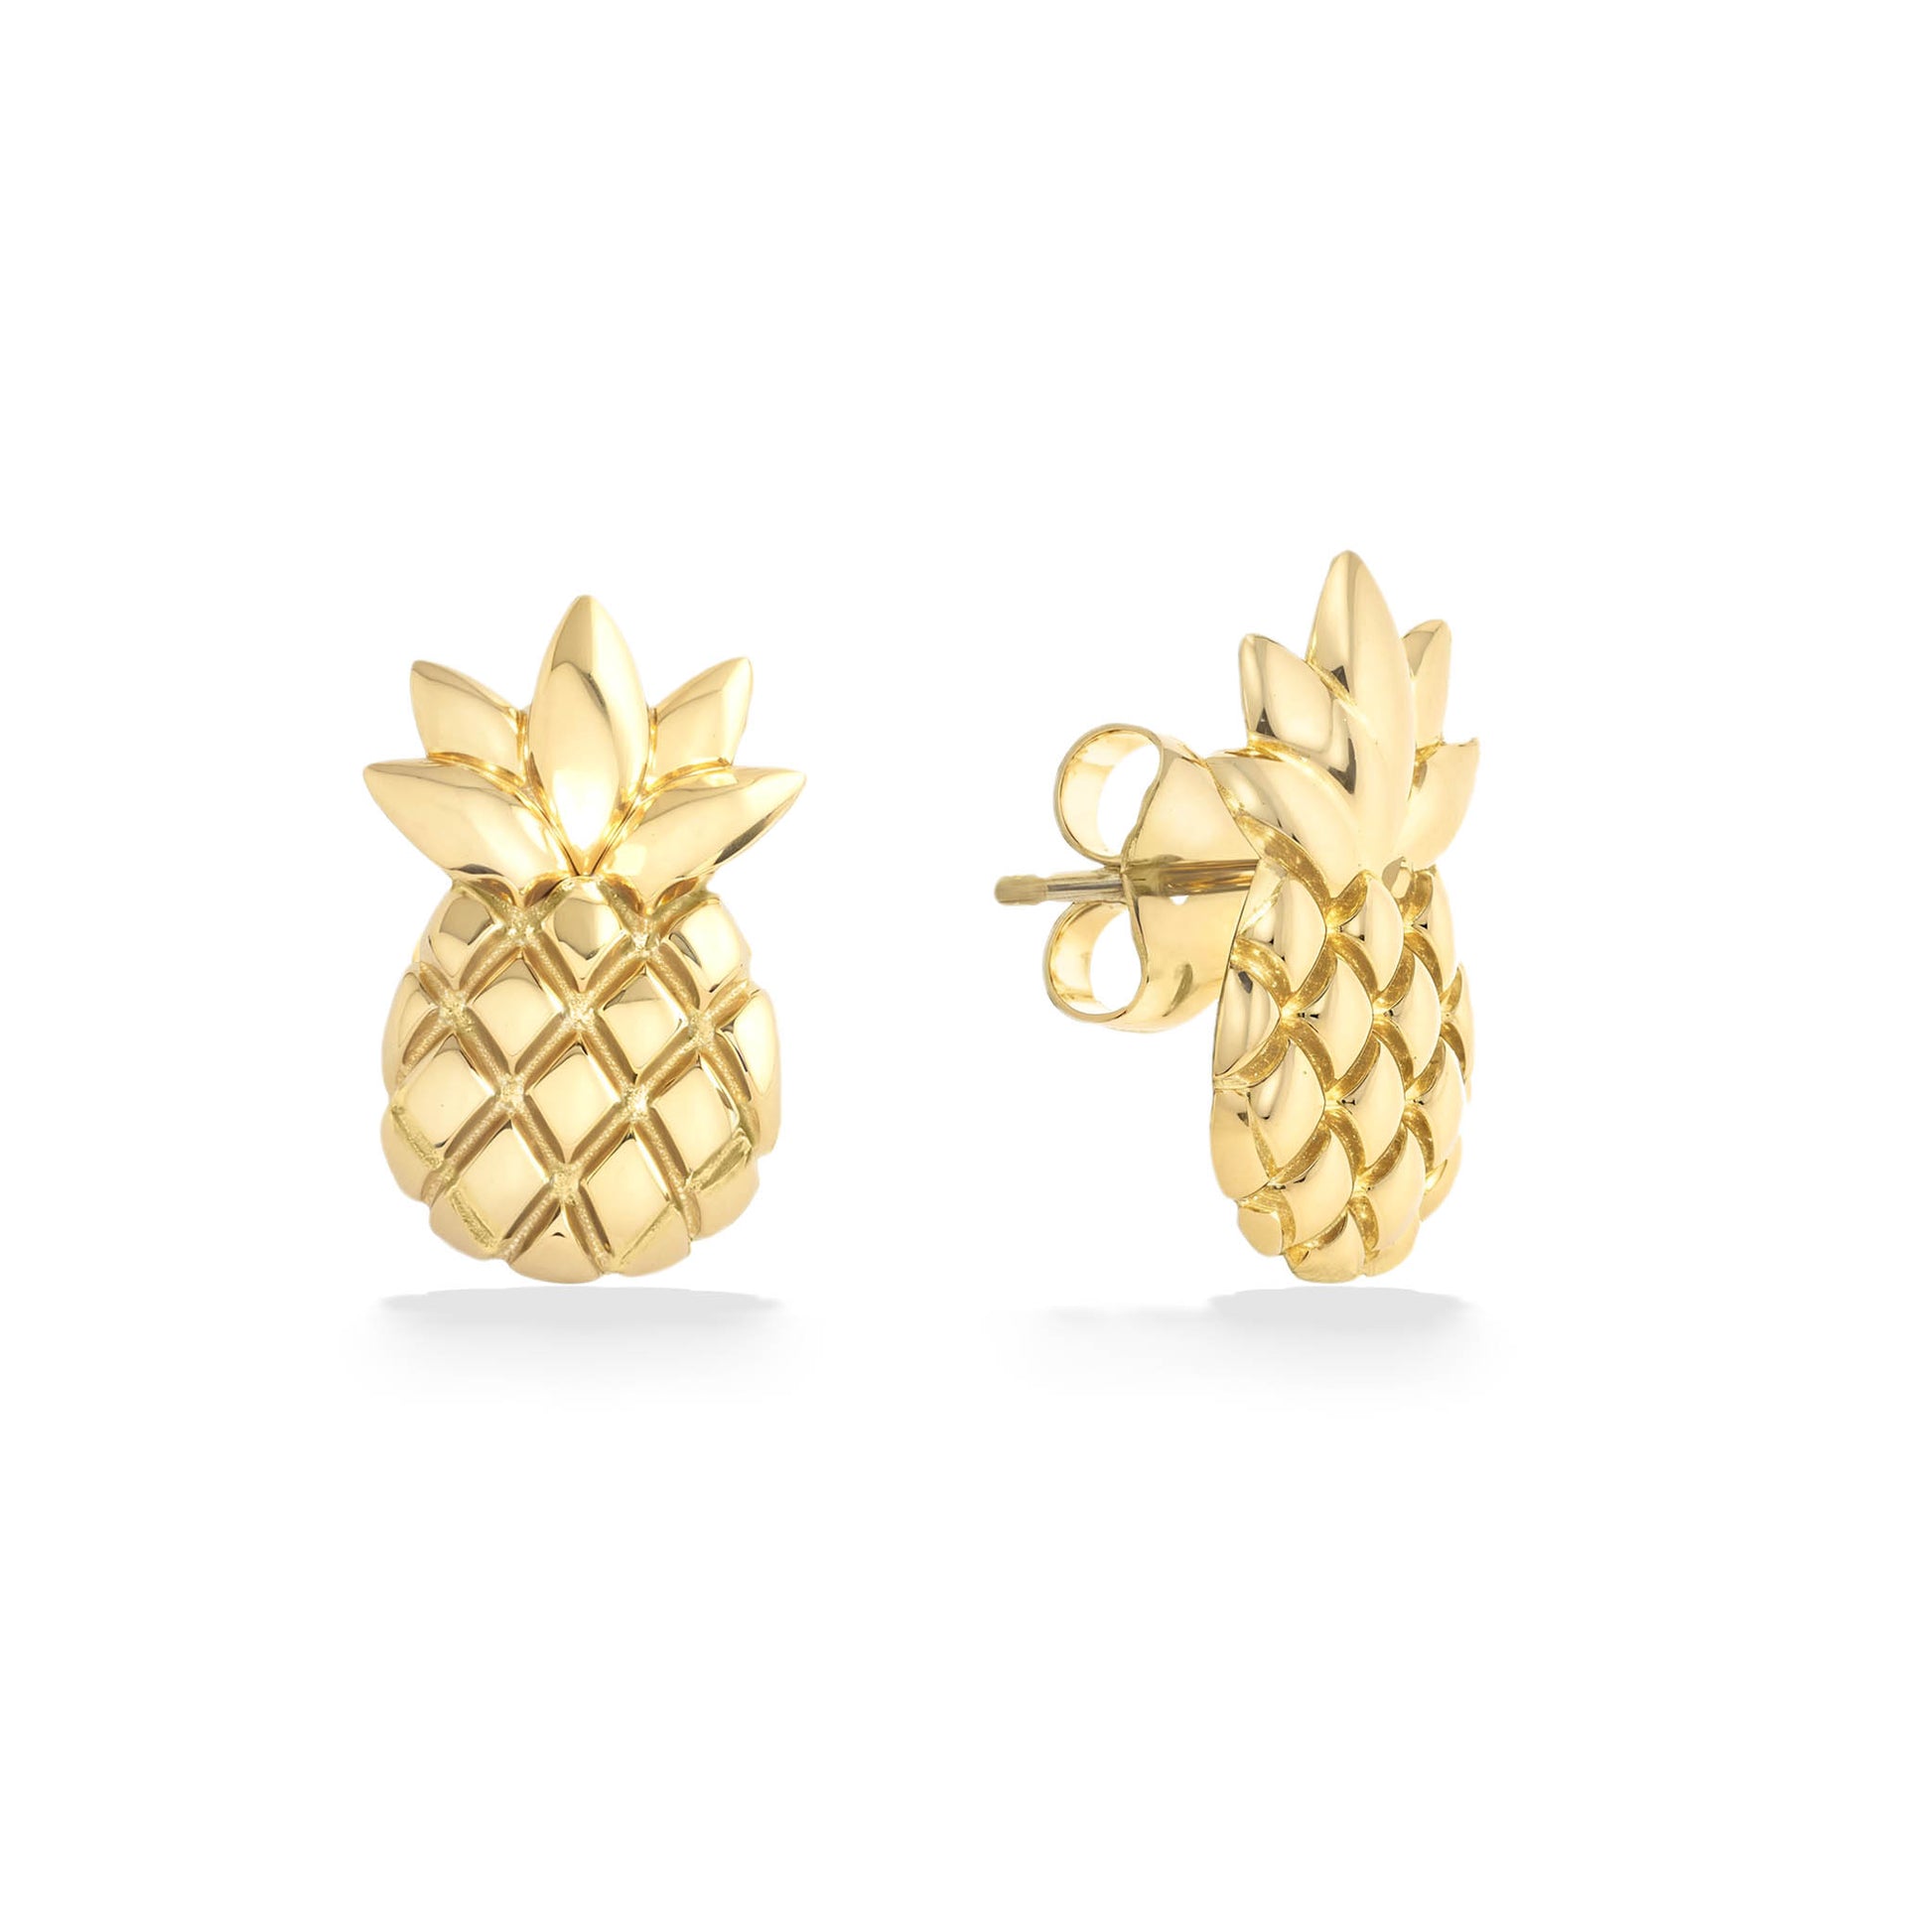 44203 - 14K Yellow Gold - Pineapple Stud Earrings